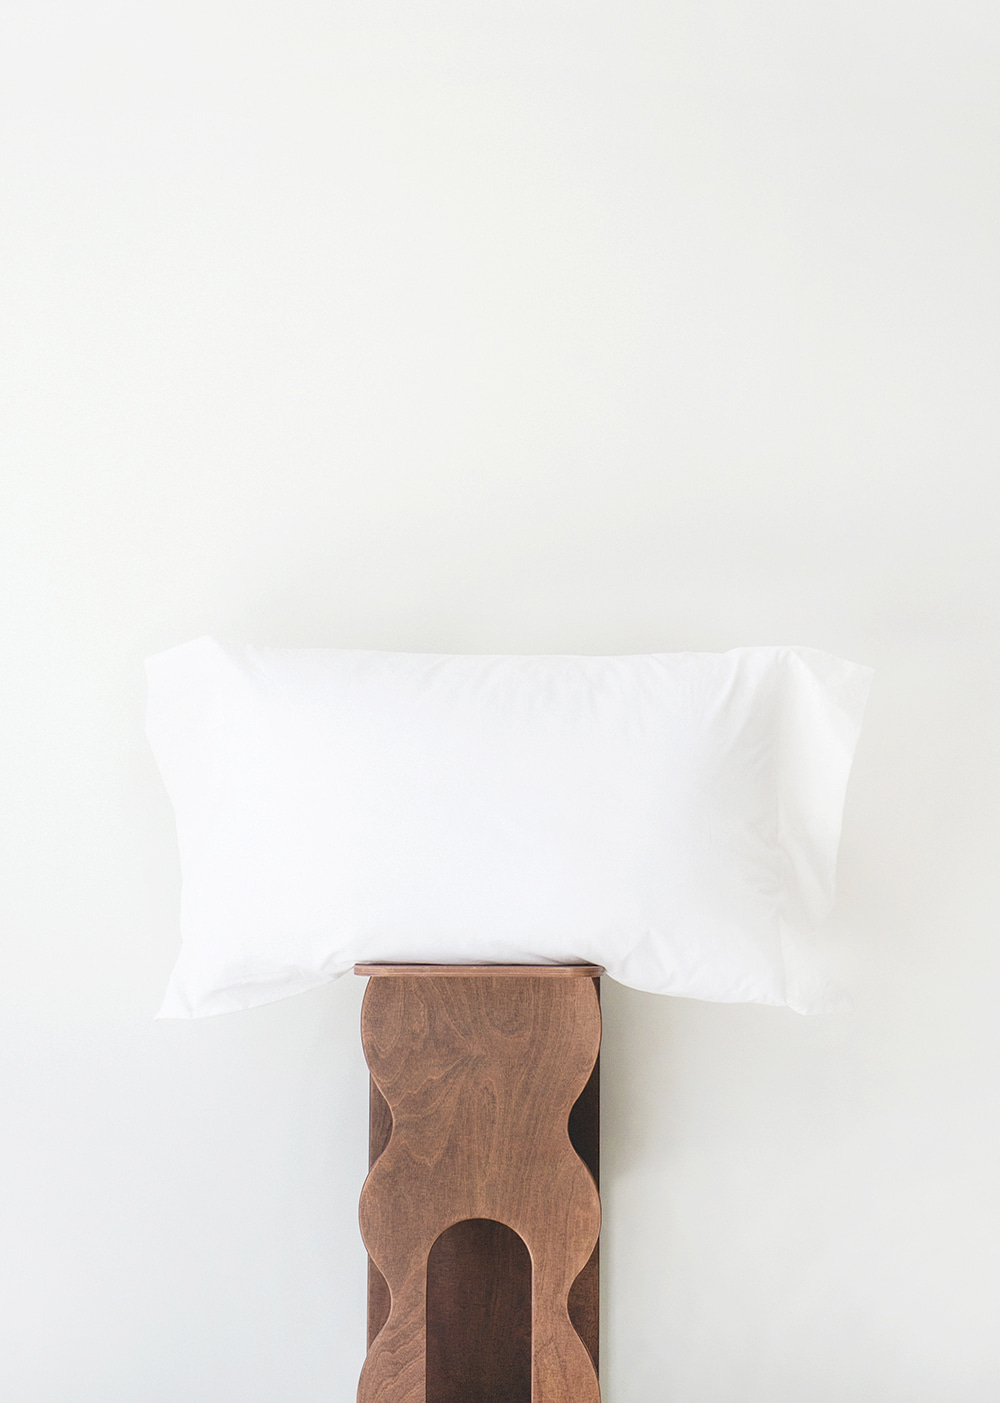 Flap cotton pillow cover - white